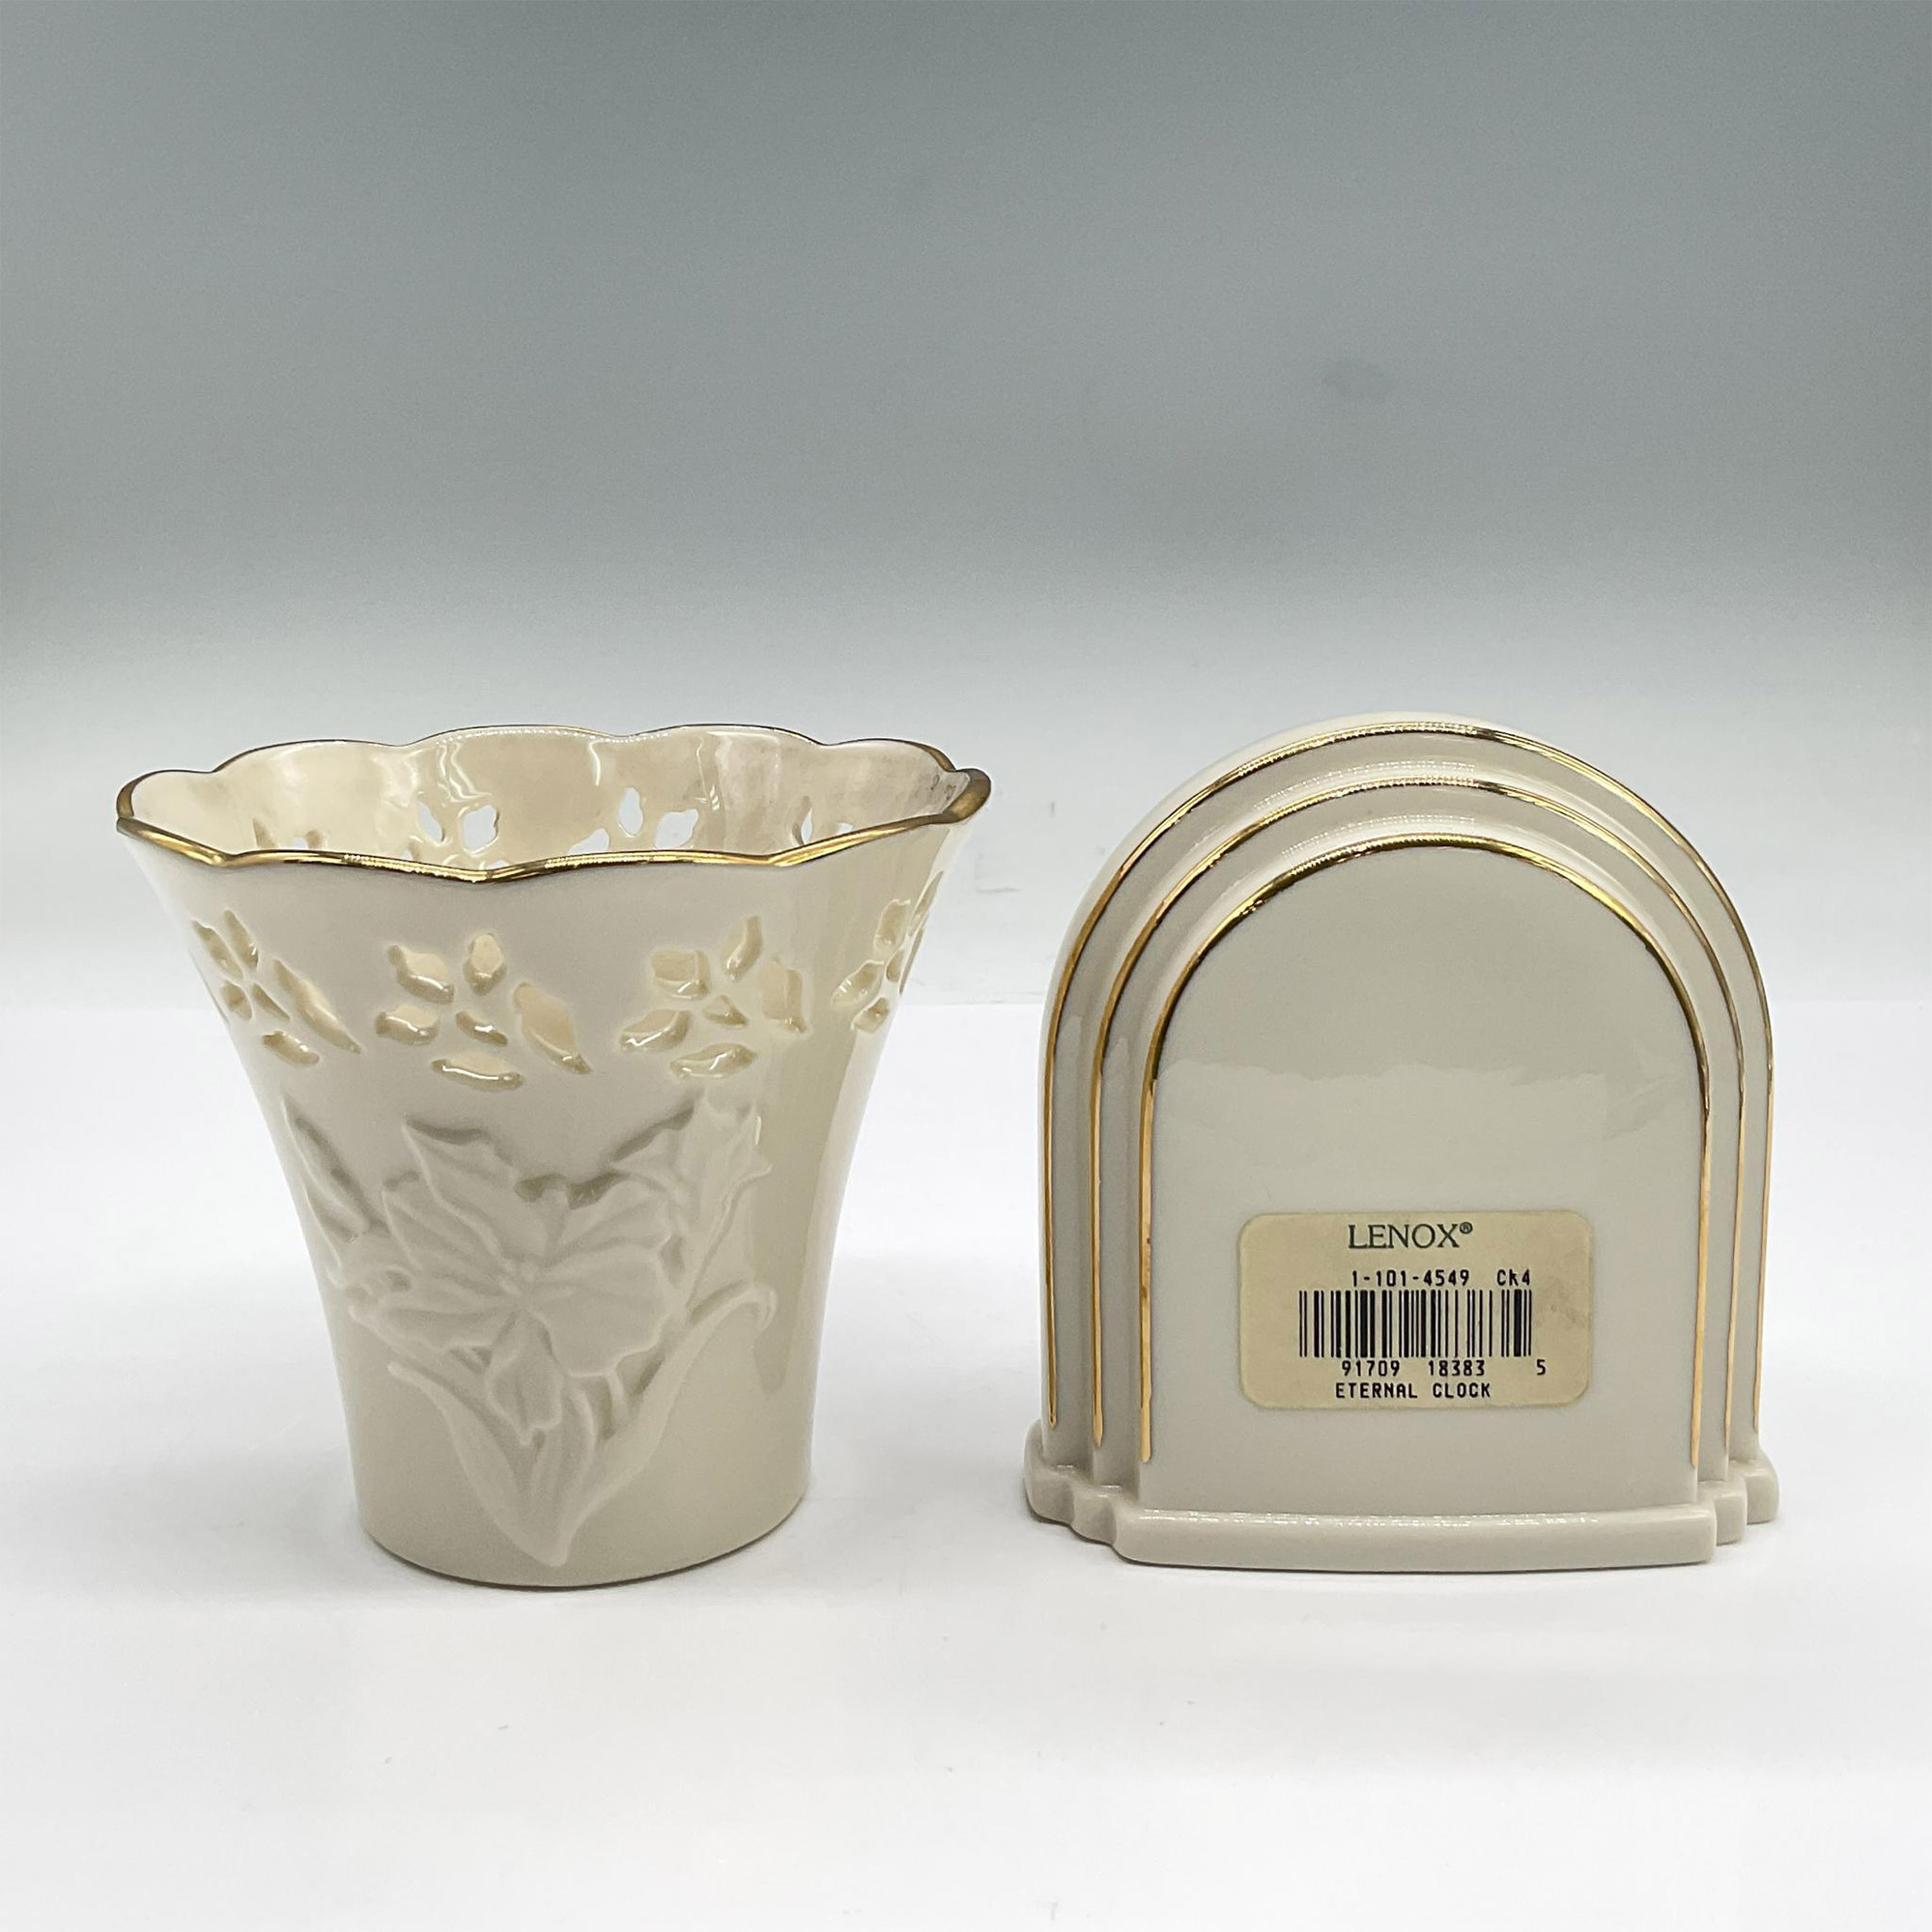 2pc Lenox Porcelain Eternal Clock and Mini Vase - Image 2 of 3